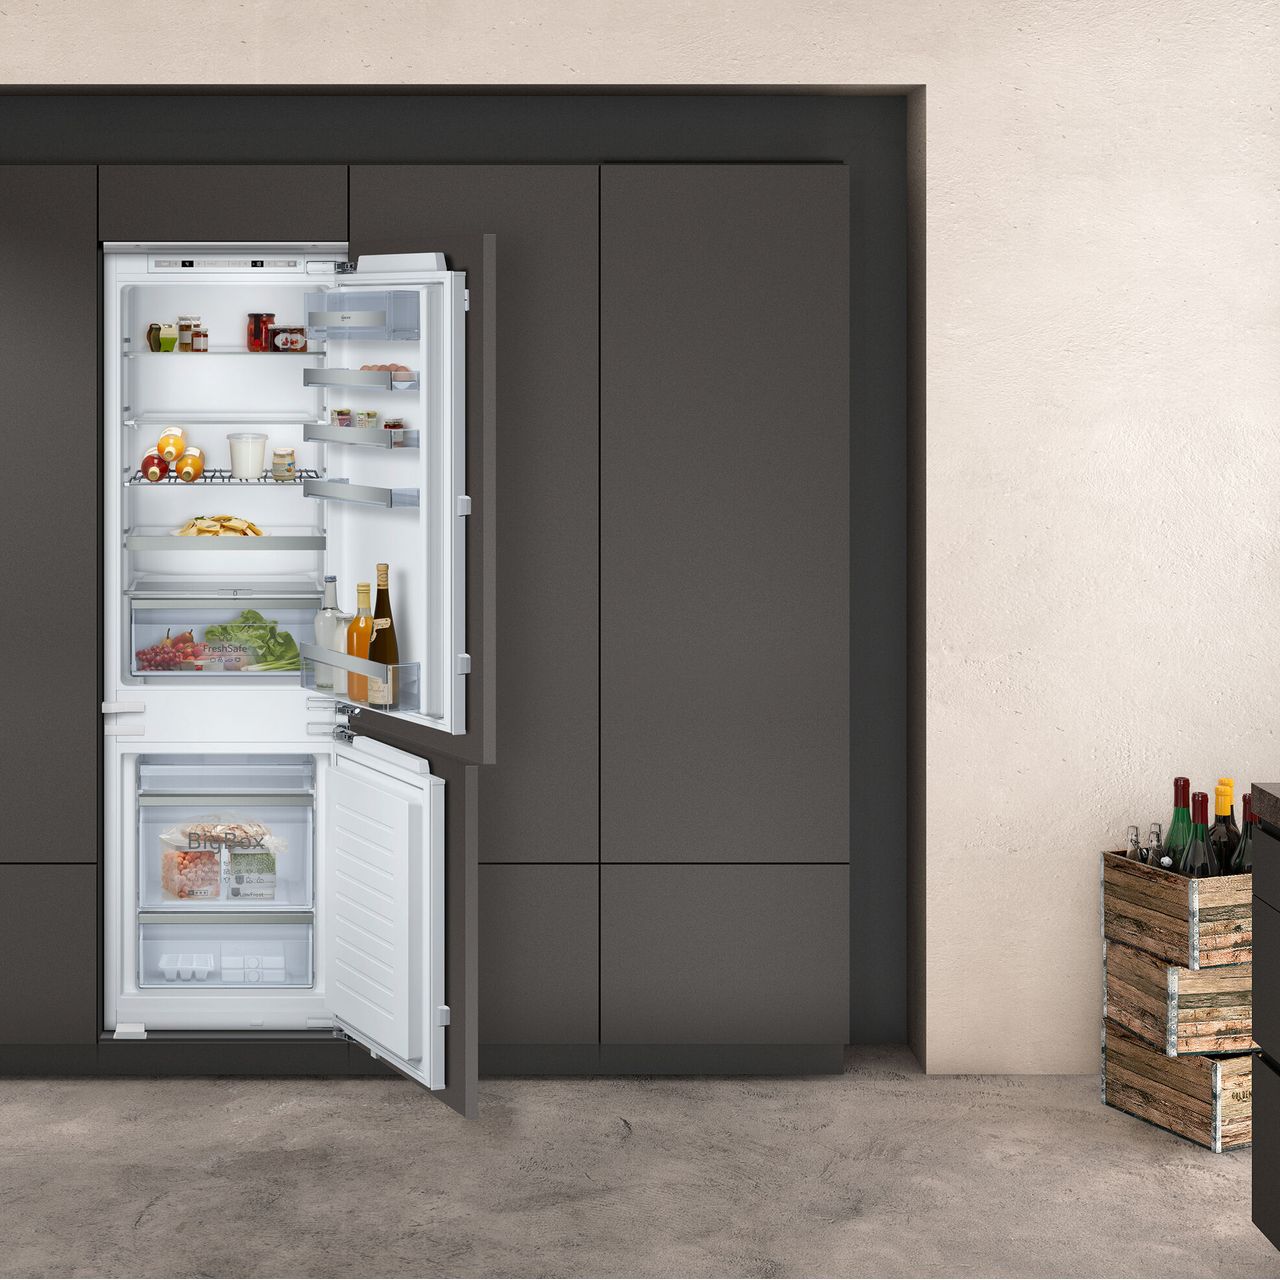 The Intelligent NEFF large fridge freezer combinations